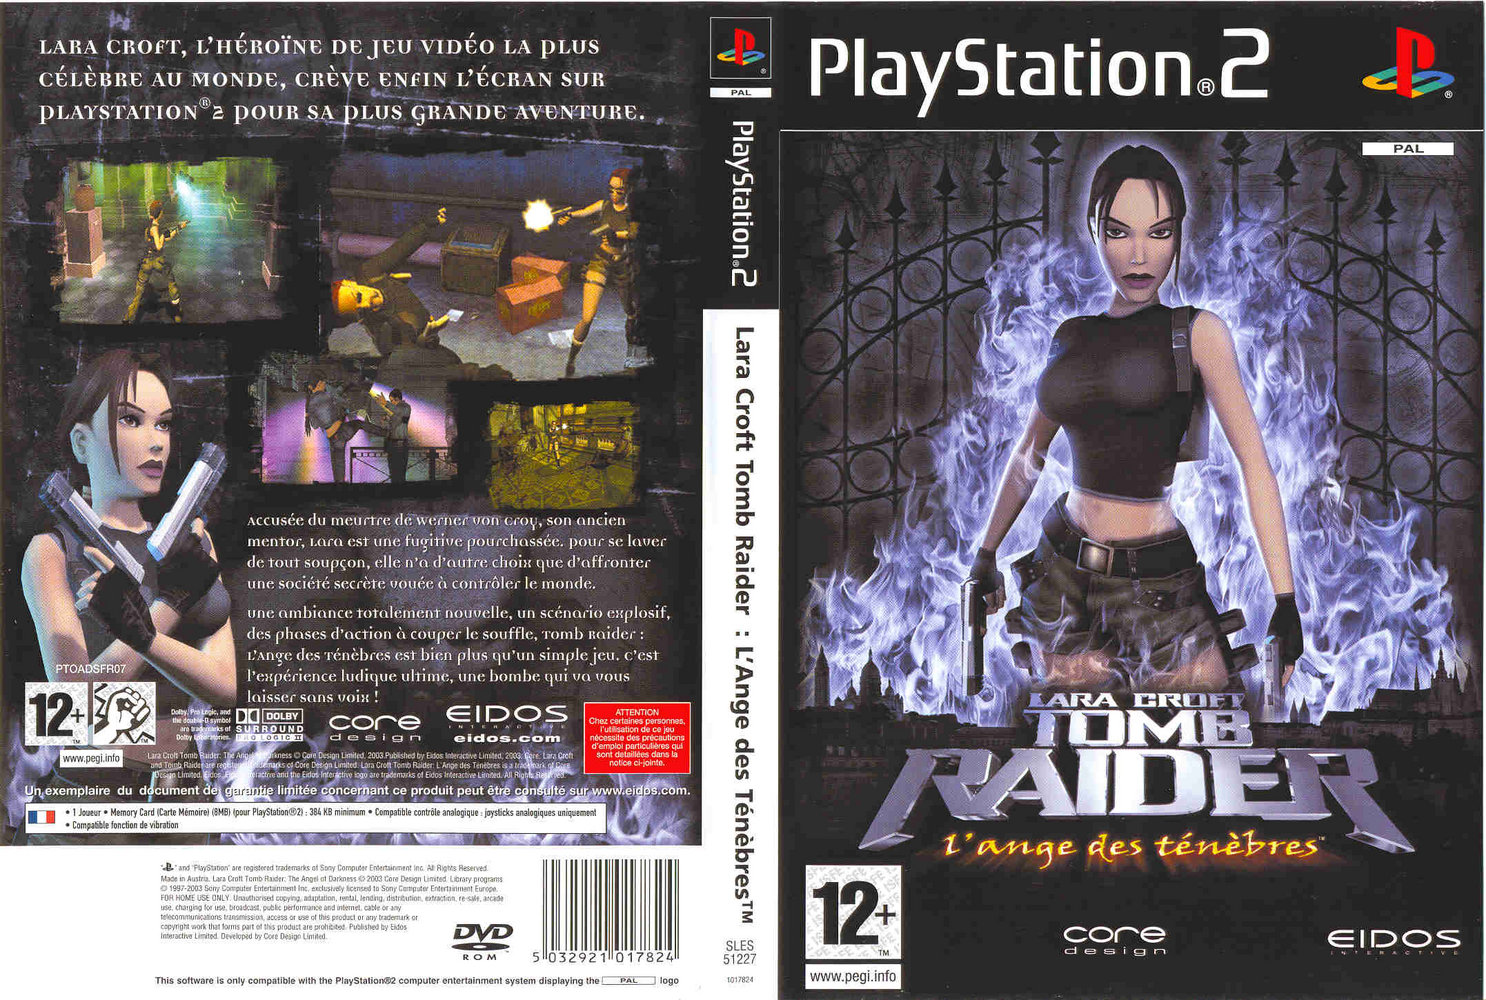 SmashLara • Tomb Raider News on X: Lara Croft returns with Zip